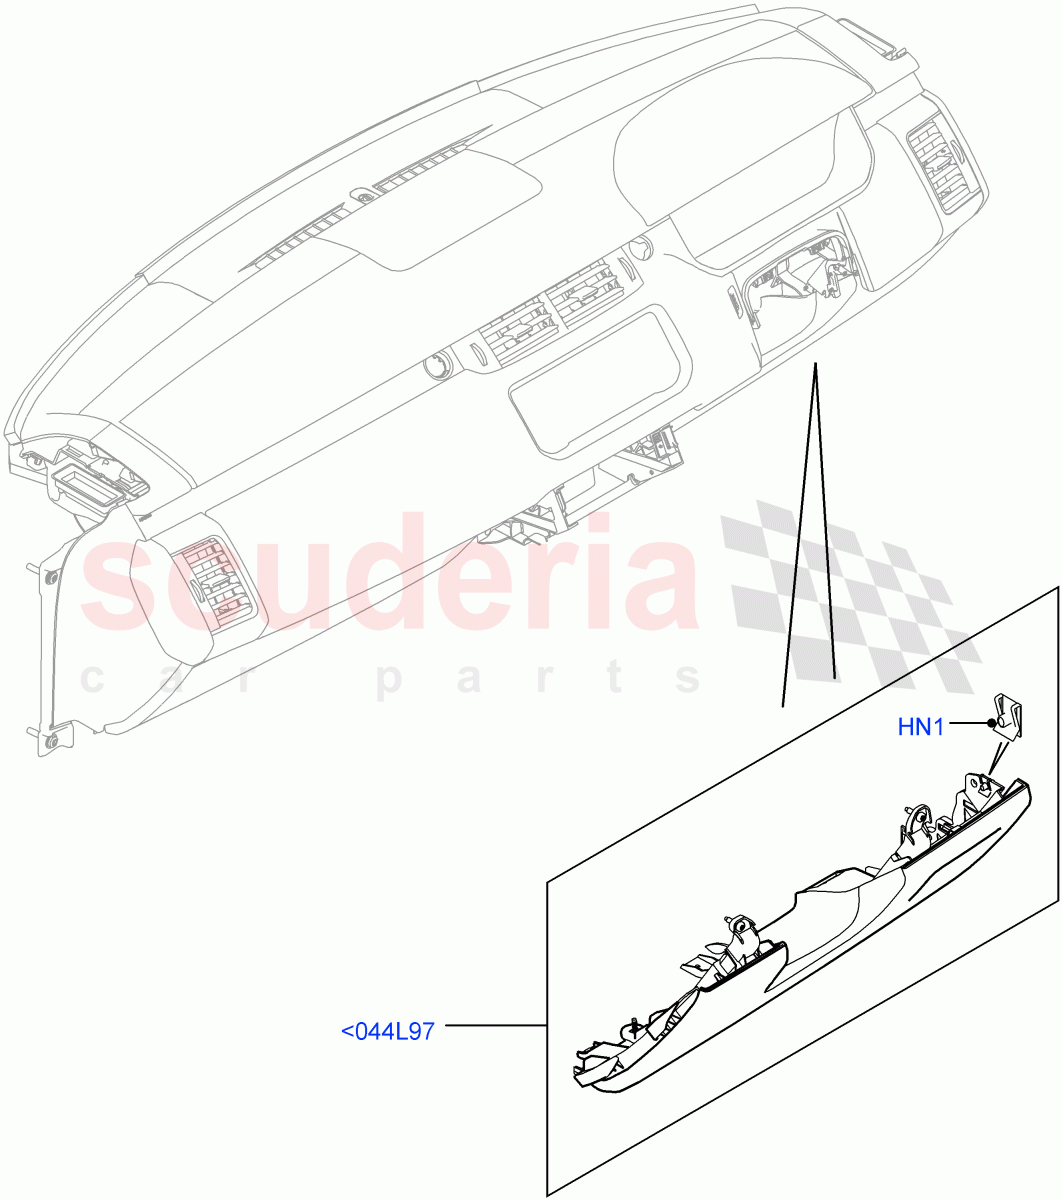 Instrument Panel(External, Lower) of Land Rover Land Rover Range Rover Sport (2014+) [3.0 I6 Turbo Diesel AJ20D6]